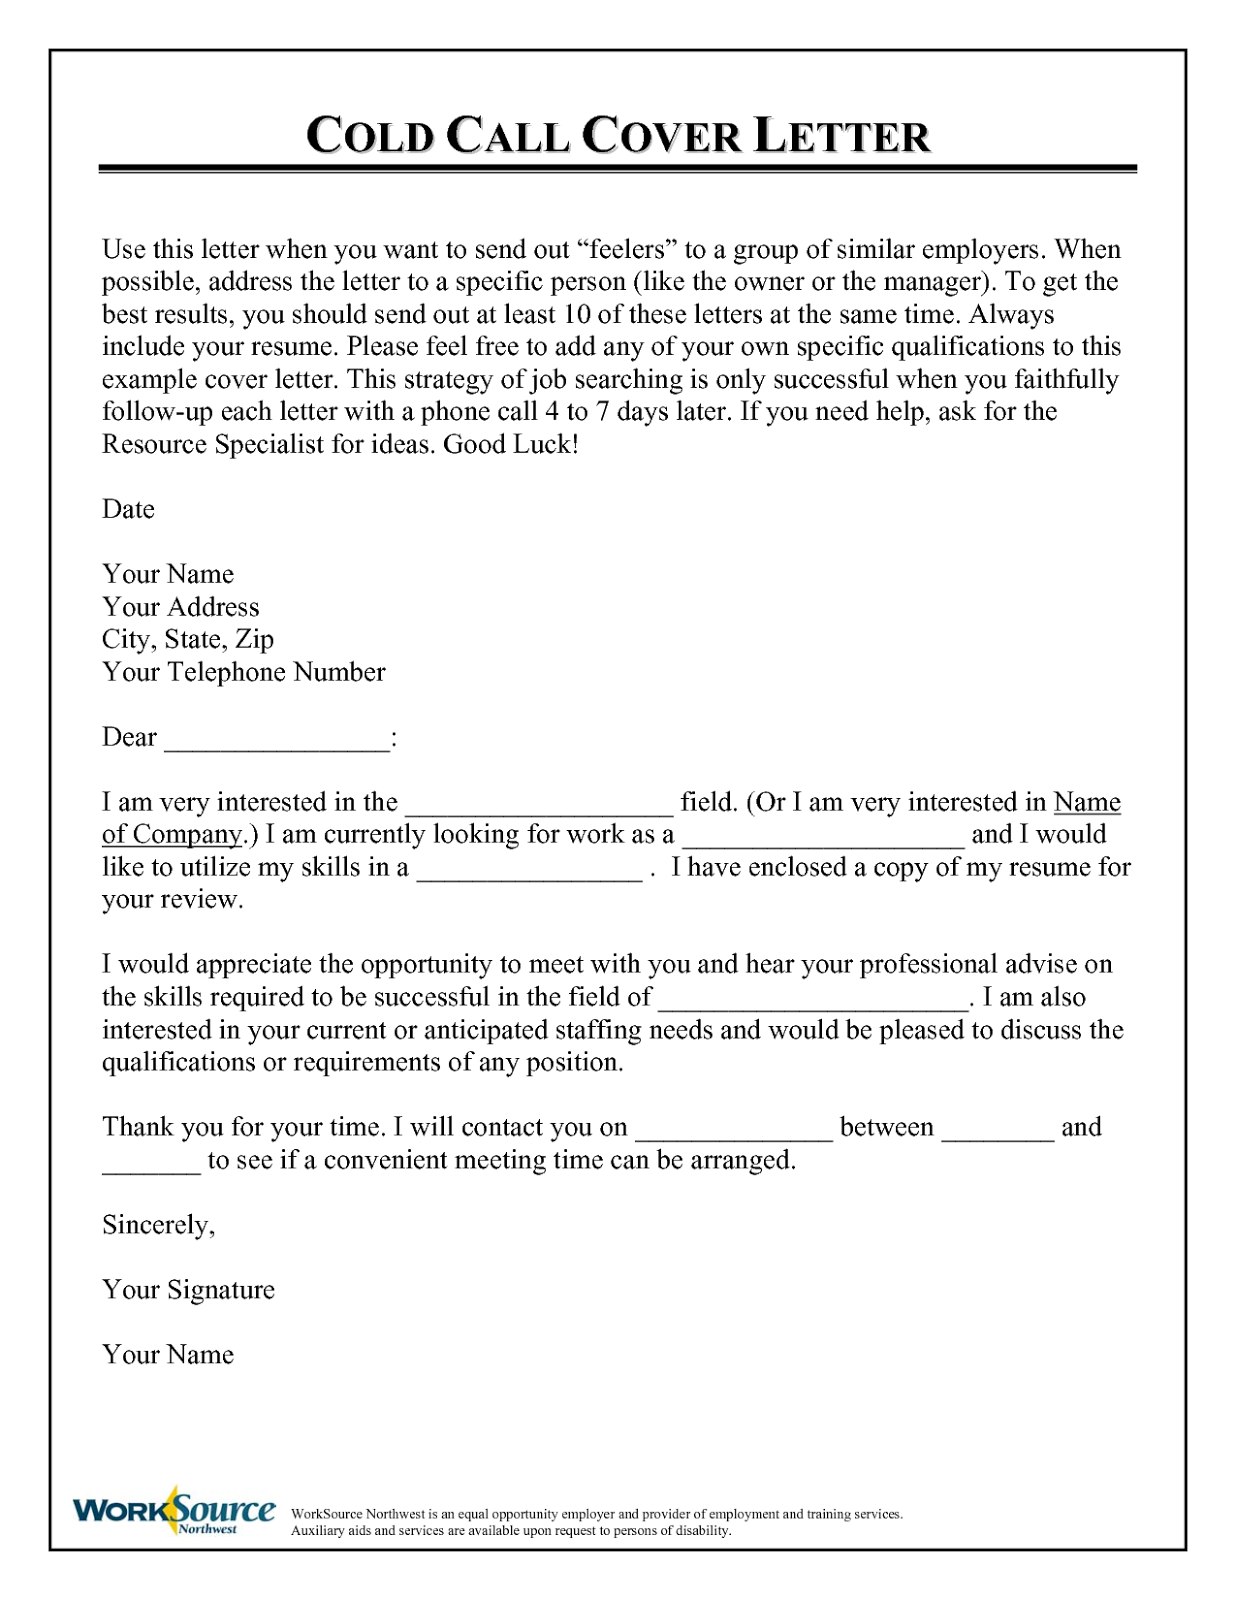 Cover letter cv email sample